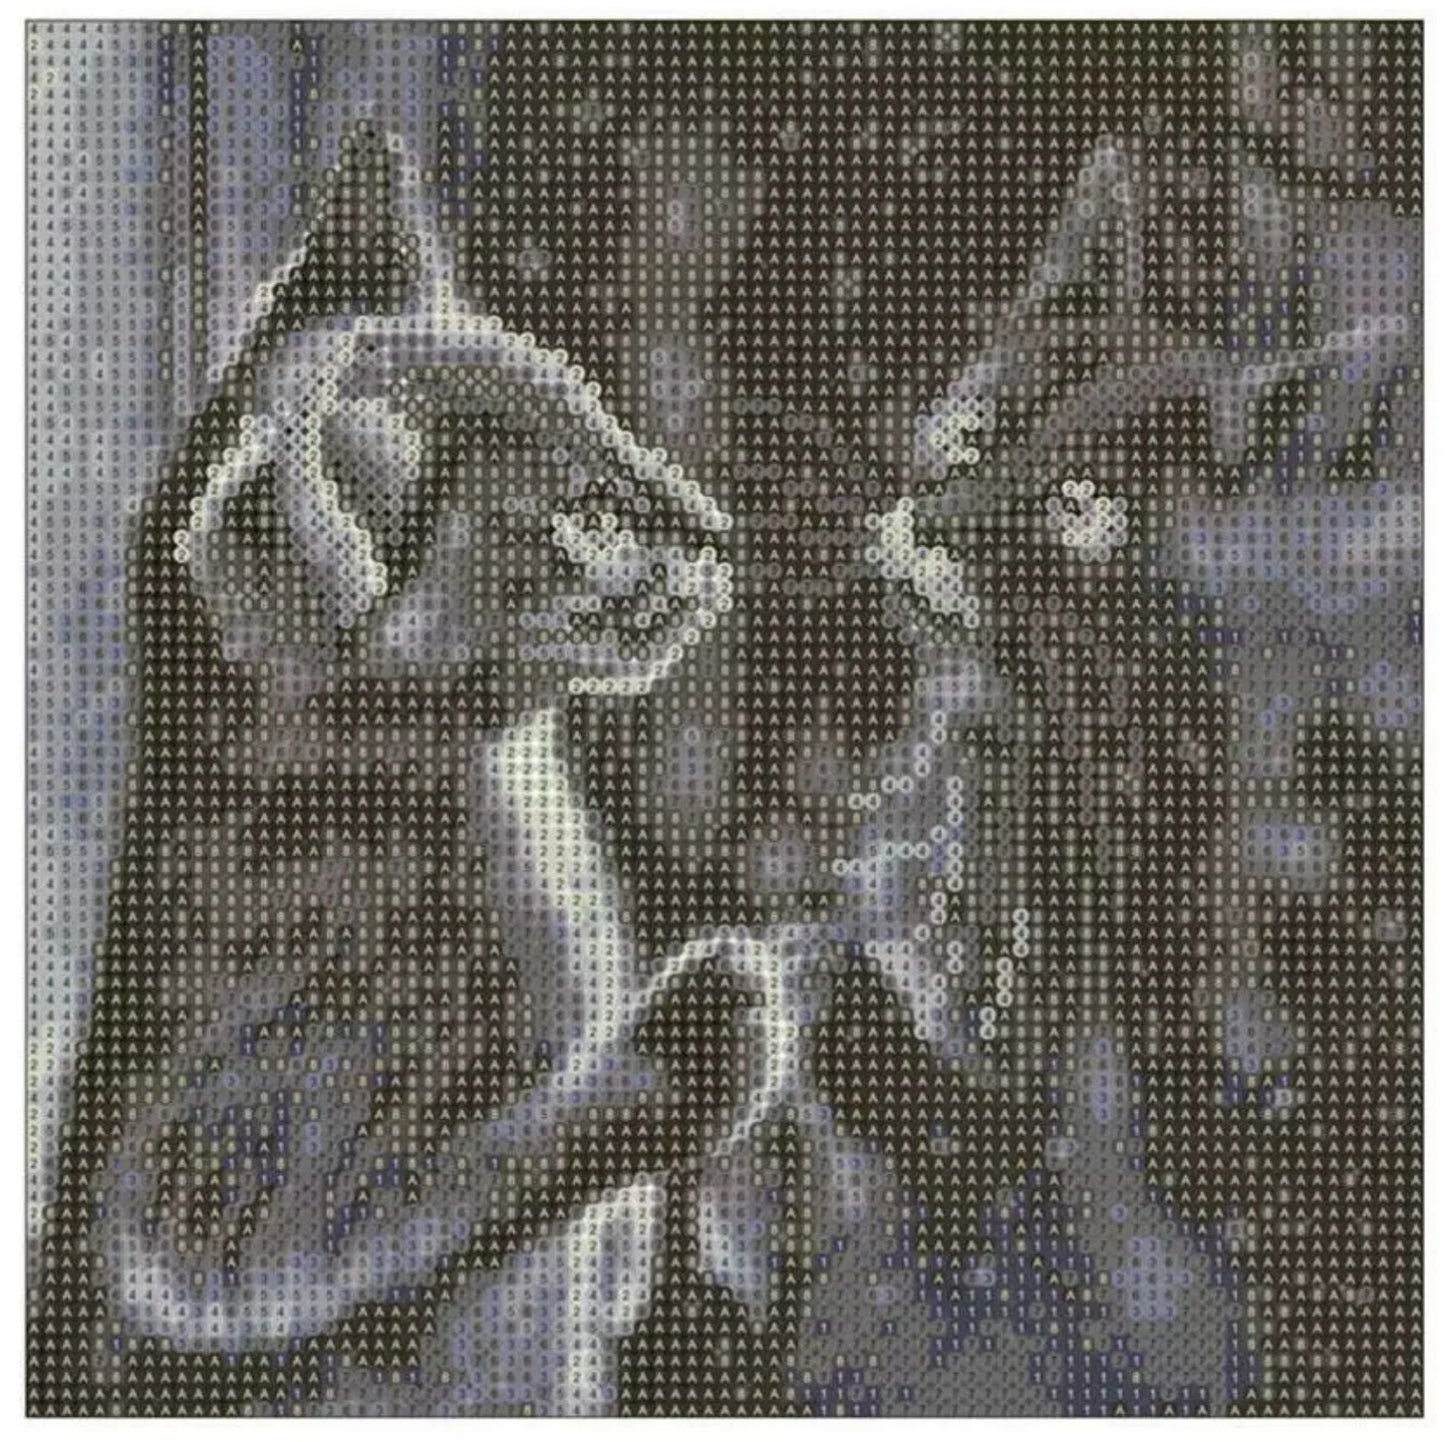 A KITTENS REFLECTION - Full Drill Diamond Painting - 30cm x 30cm